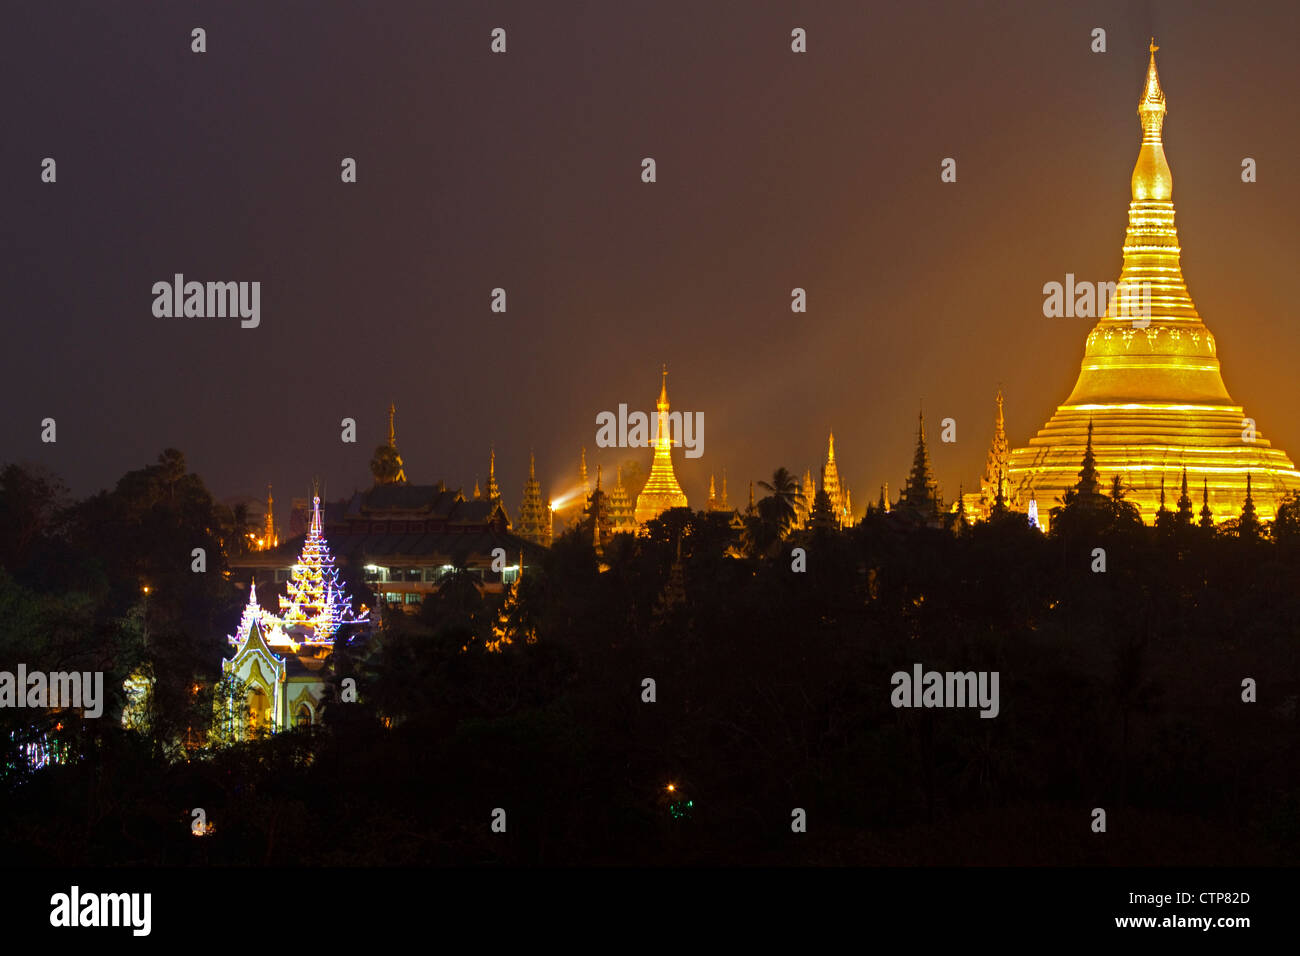 La Shwedagon Paya situato in (Rangoon)Yangon, Birmania (Myanmar). Foto Stock